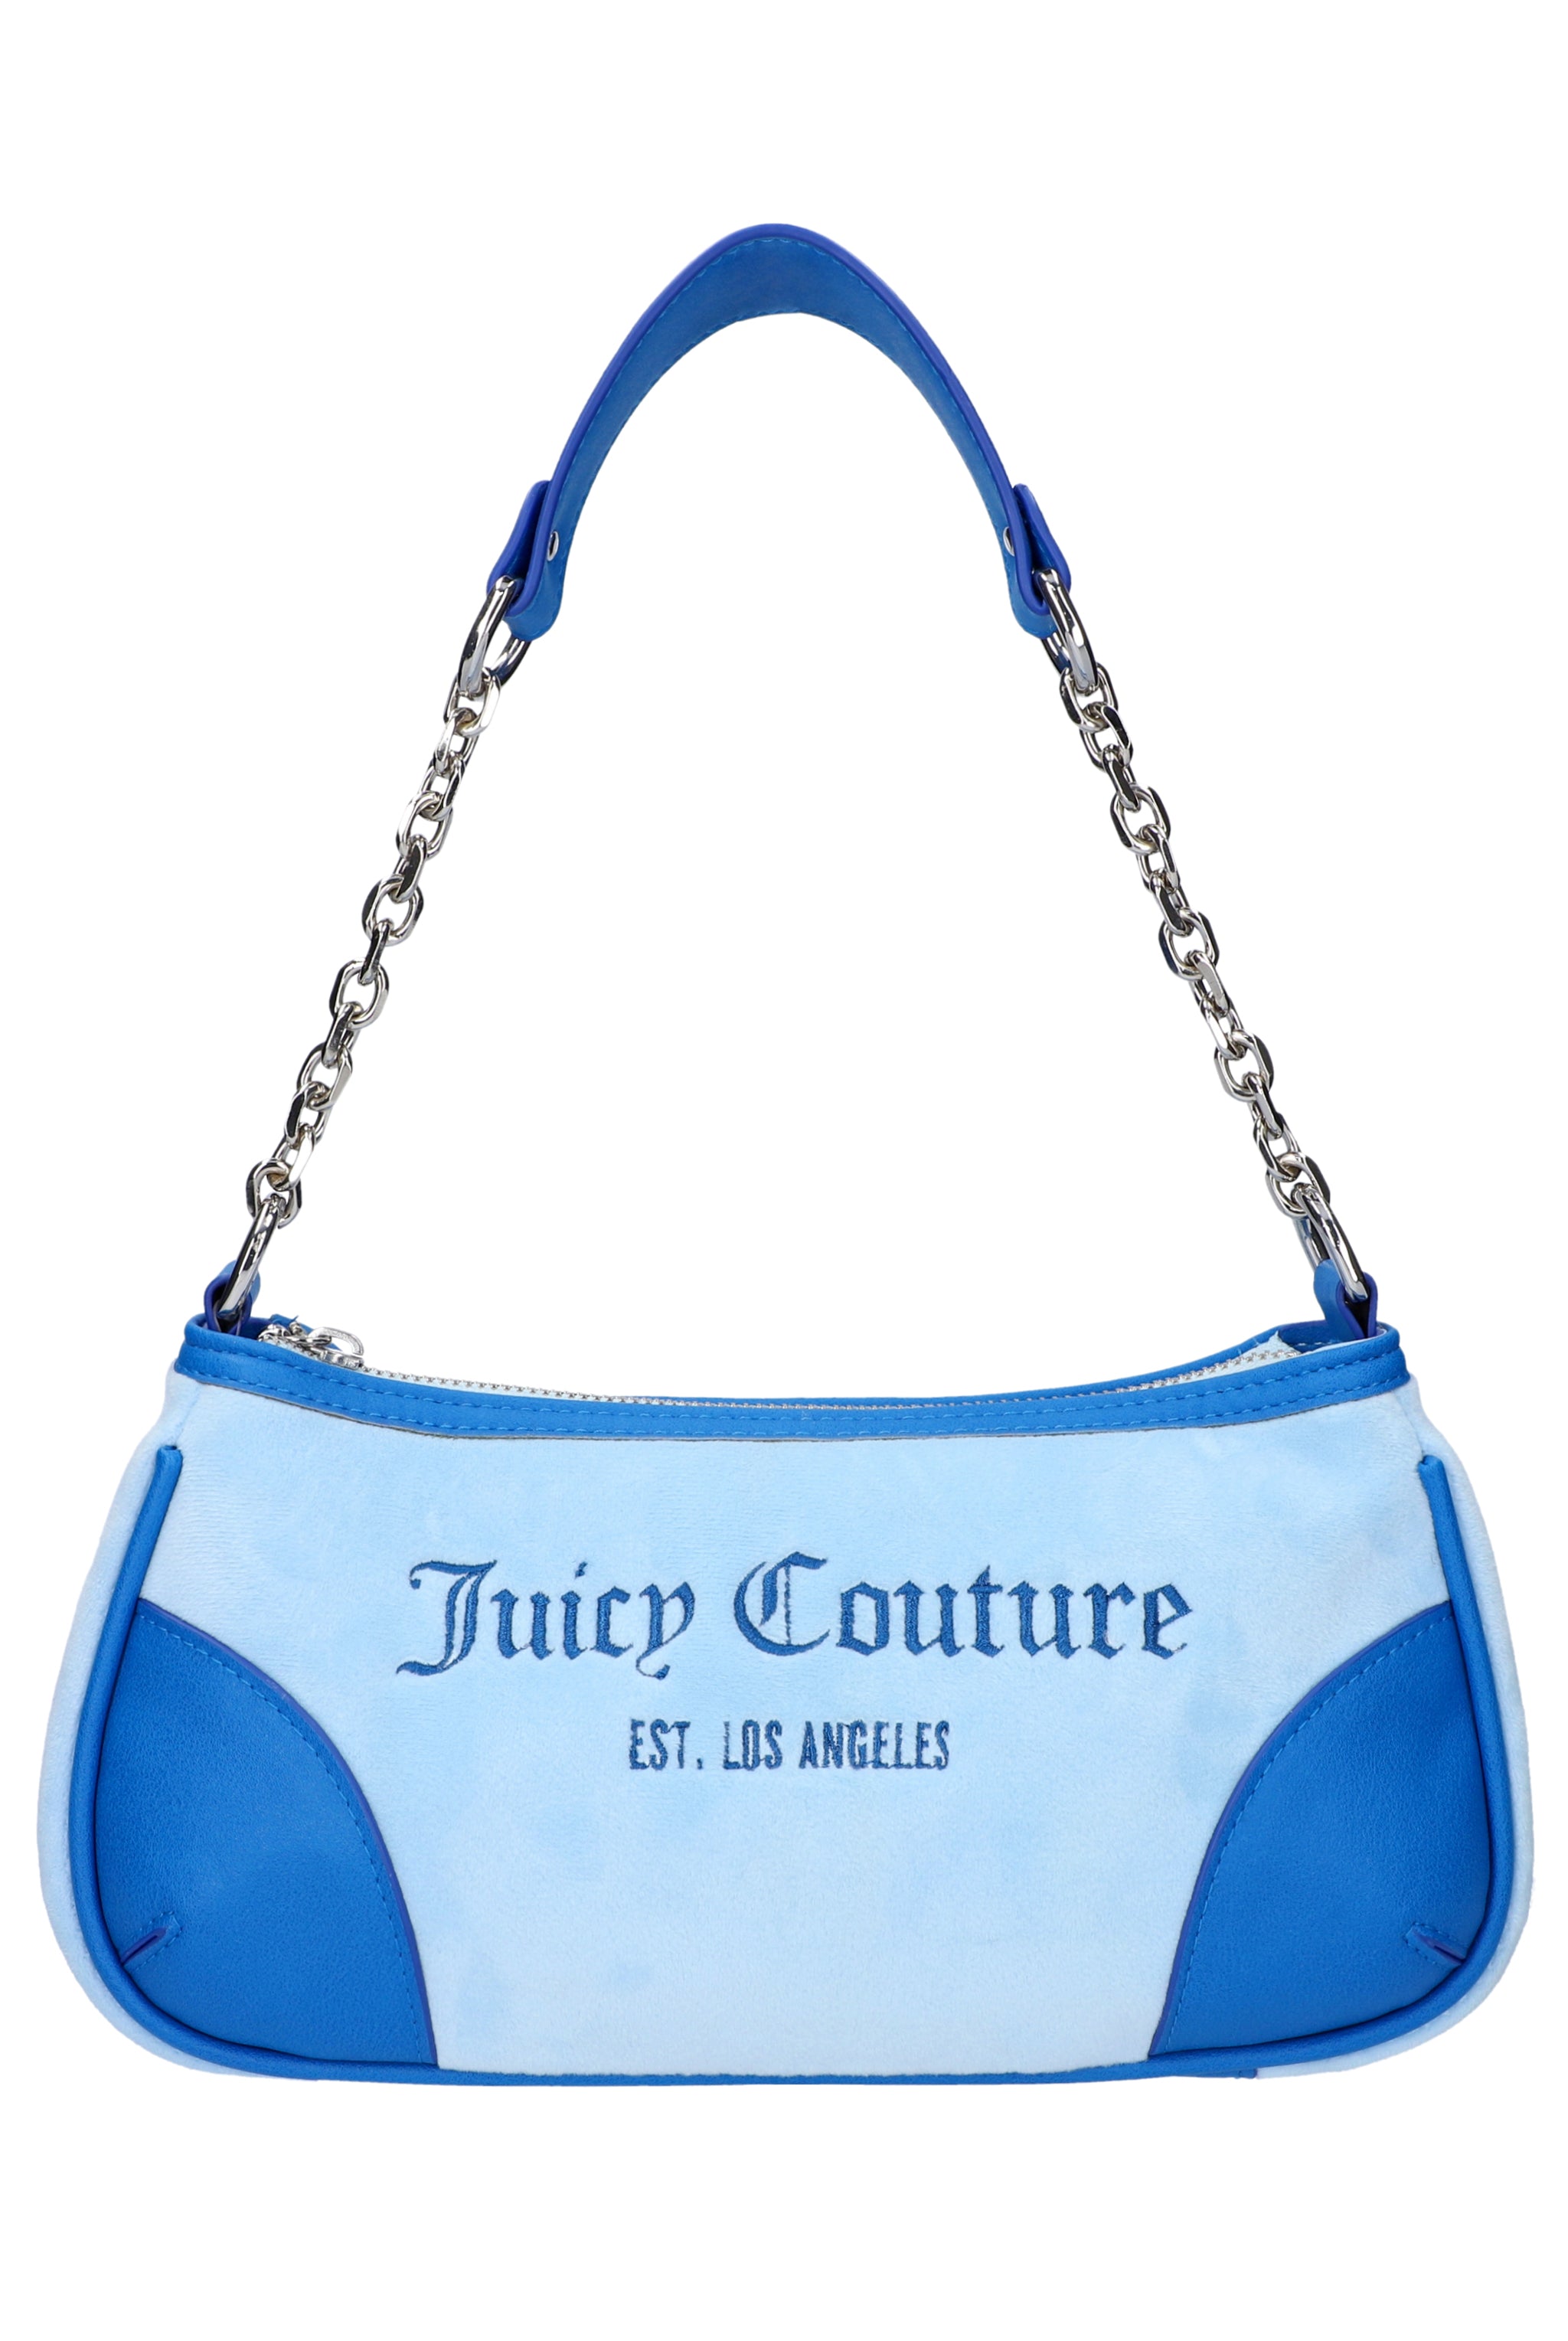 Juicy Couture Plus IRIS - Handbag - blau/blue - Zalando.de